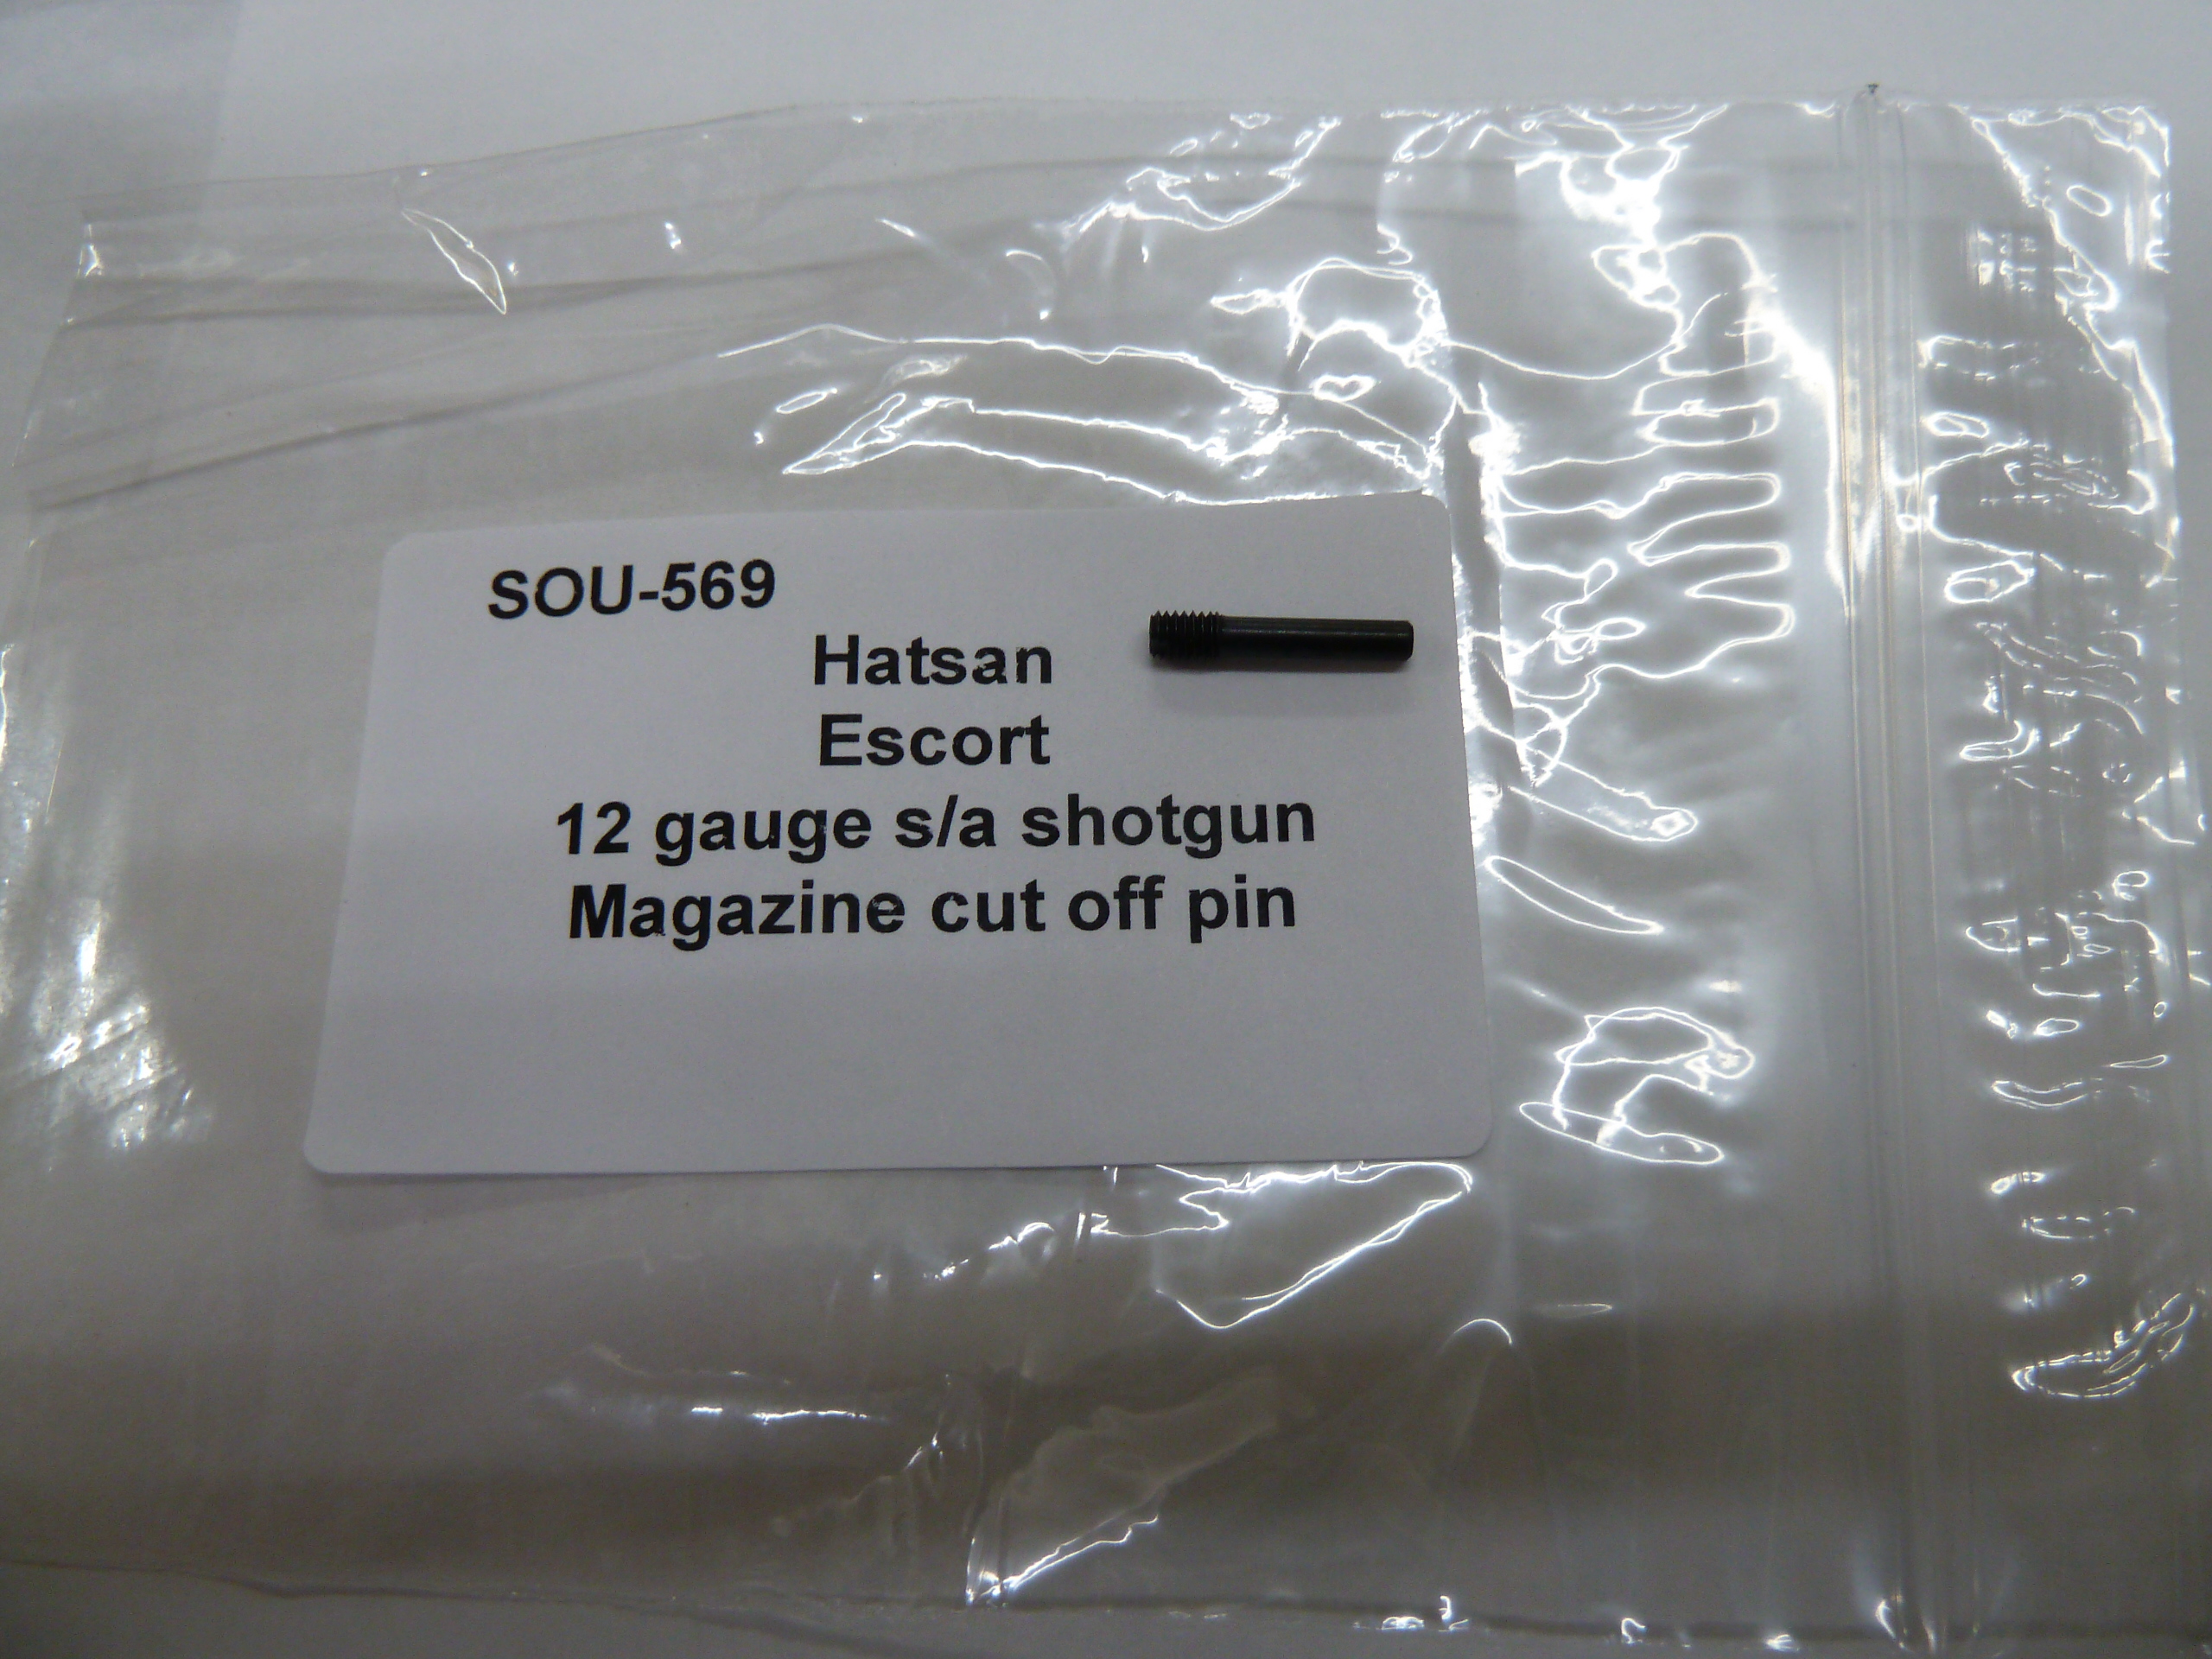 SOU-569 Hatsan Escort 12 gauge sa shotgun magazine cut off pin